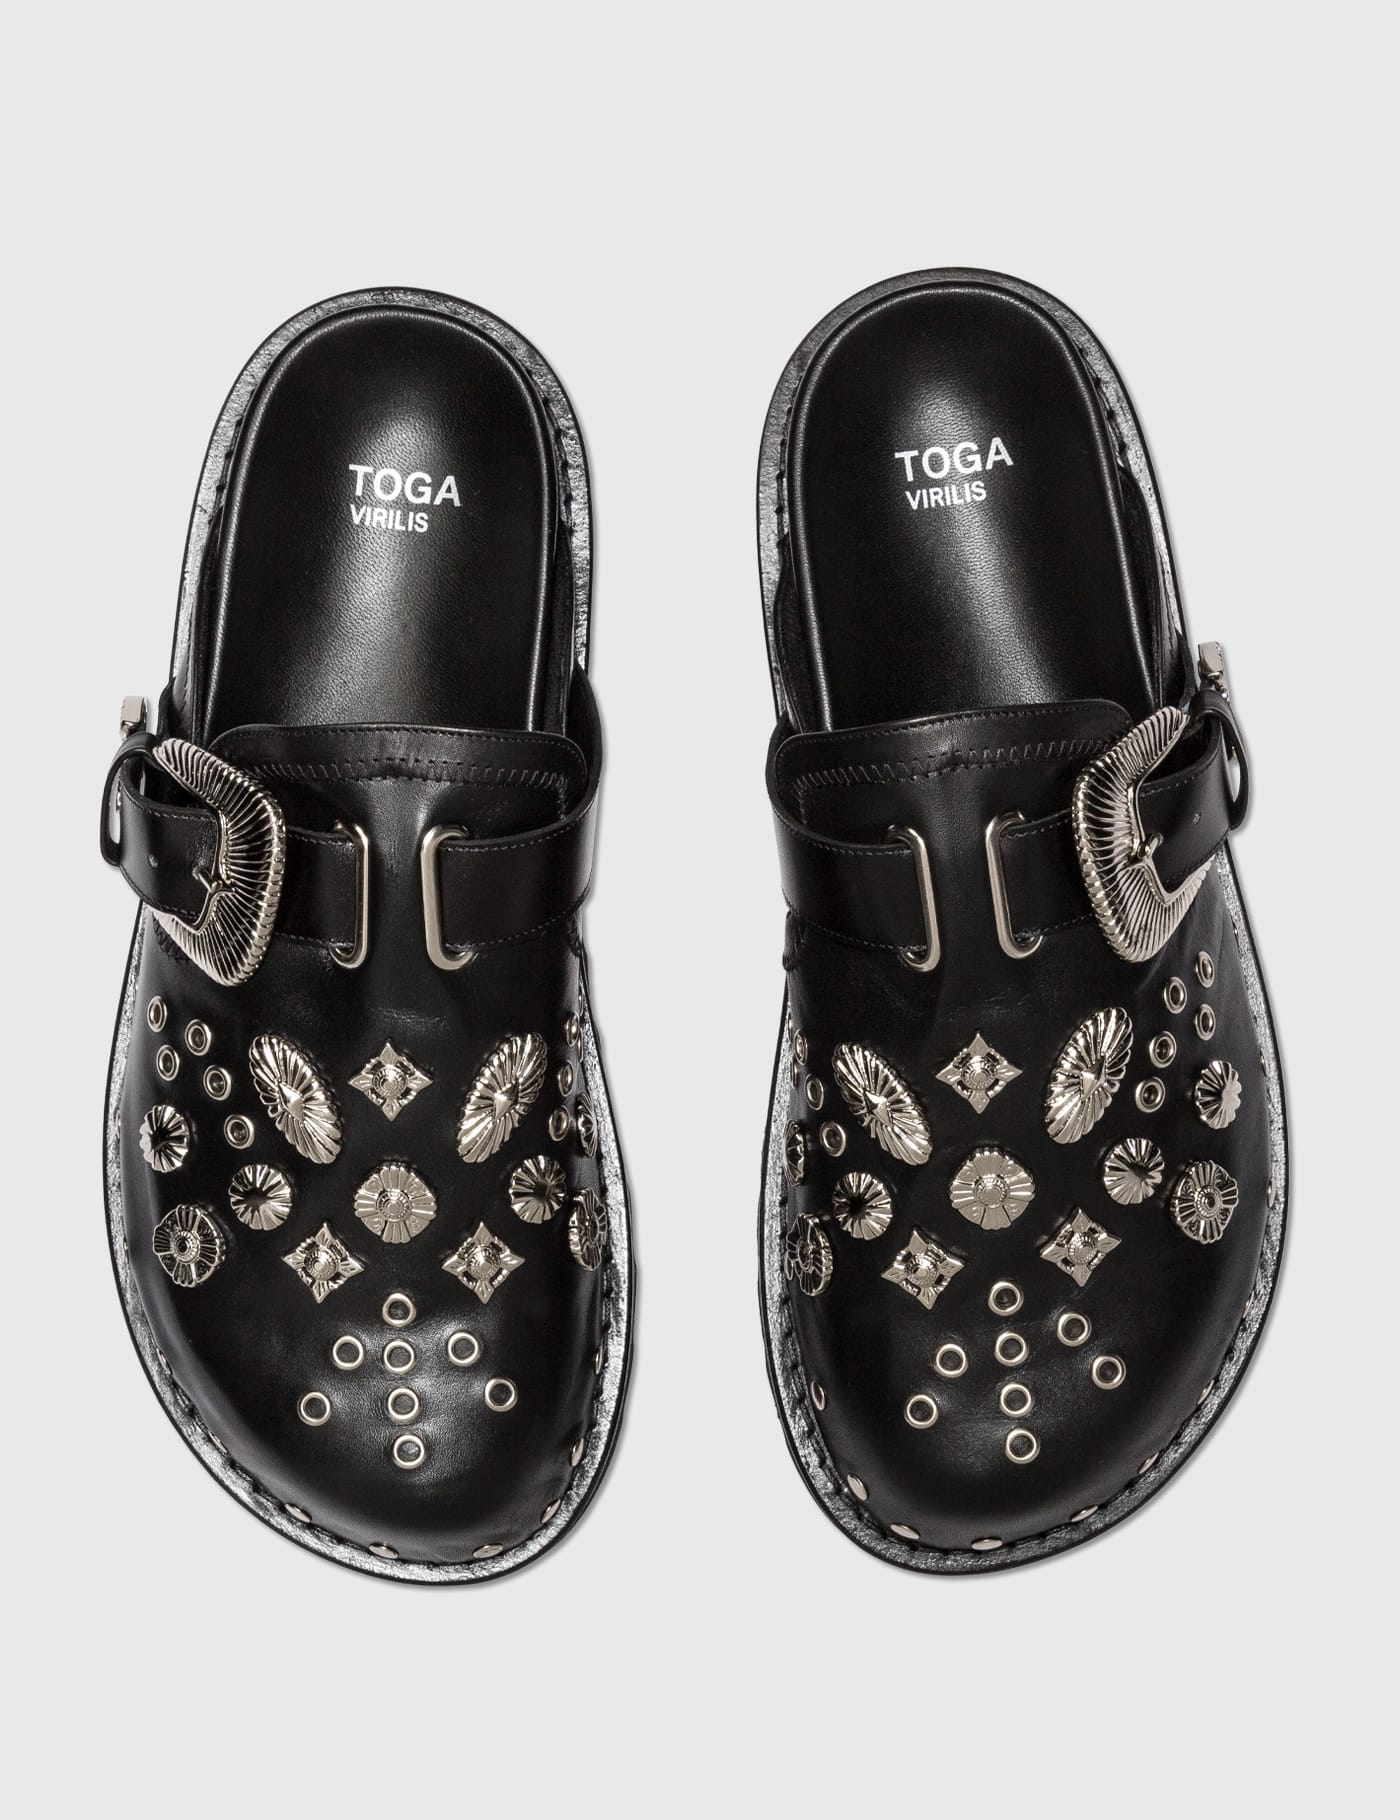 Toga Virilis - Studded Leather Slip-on Boots | HBX - Globally